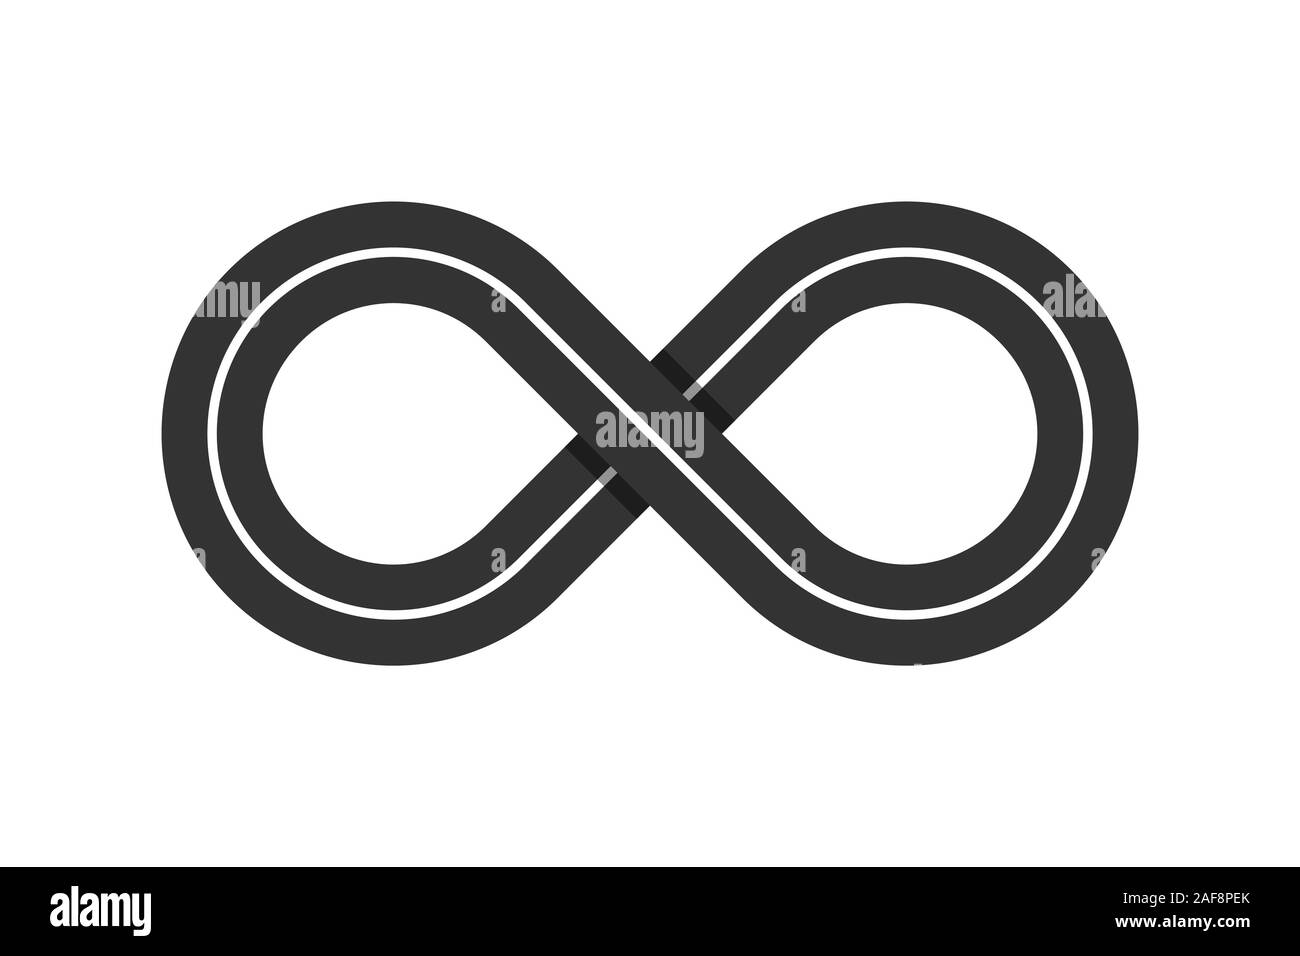 Infinity symbol. Eternal shape. Infinity road loop icon. Figure 8 Traffic Loop. Race track sign or logo. Highway intersection or interchange. Vector Stock Vector